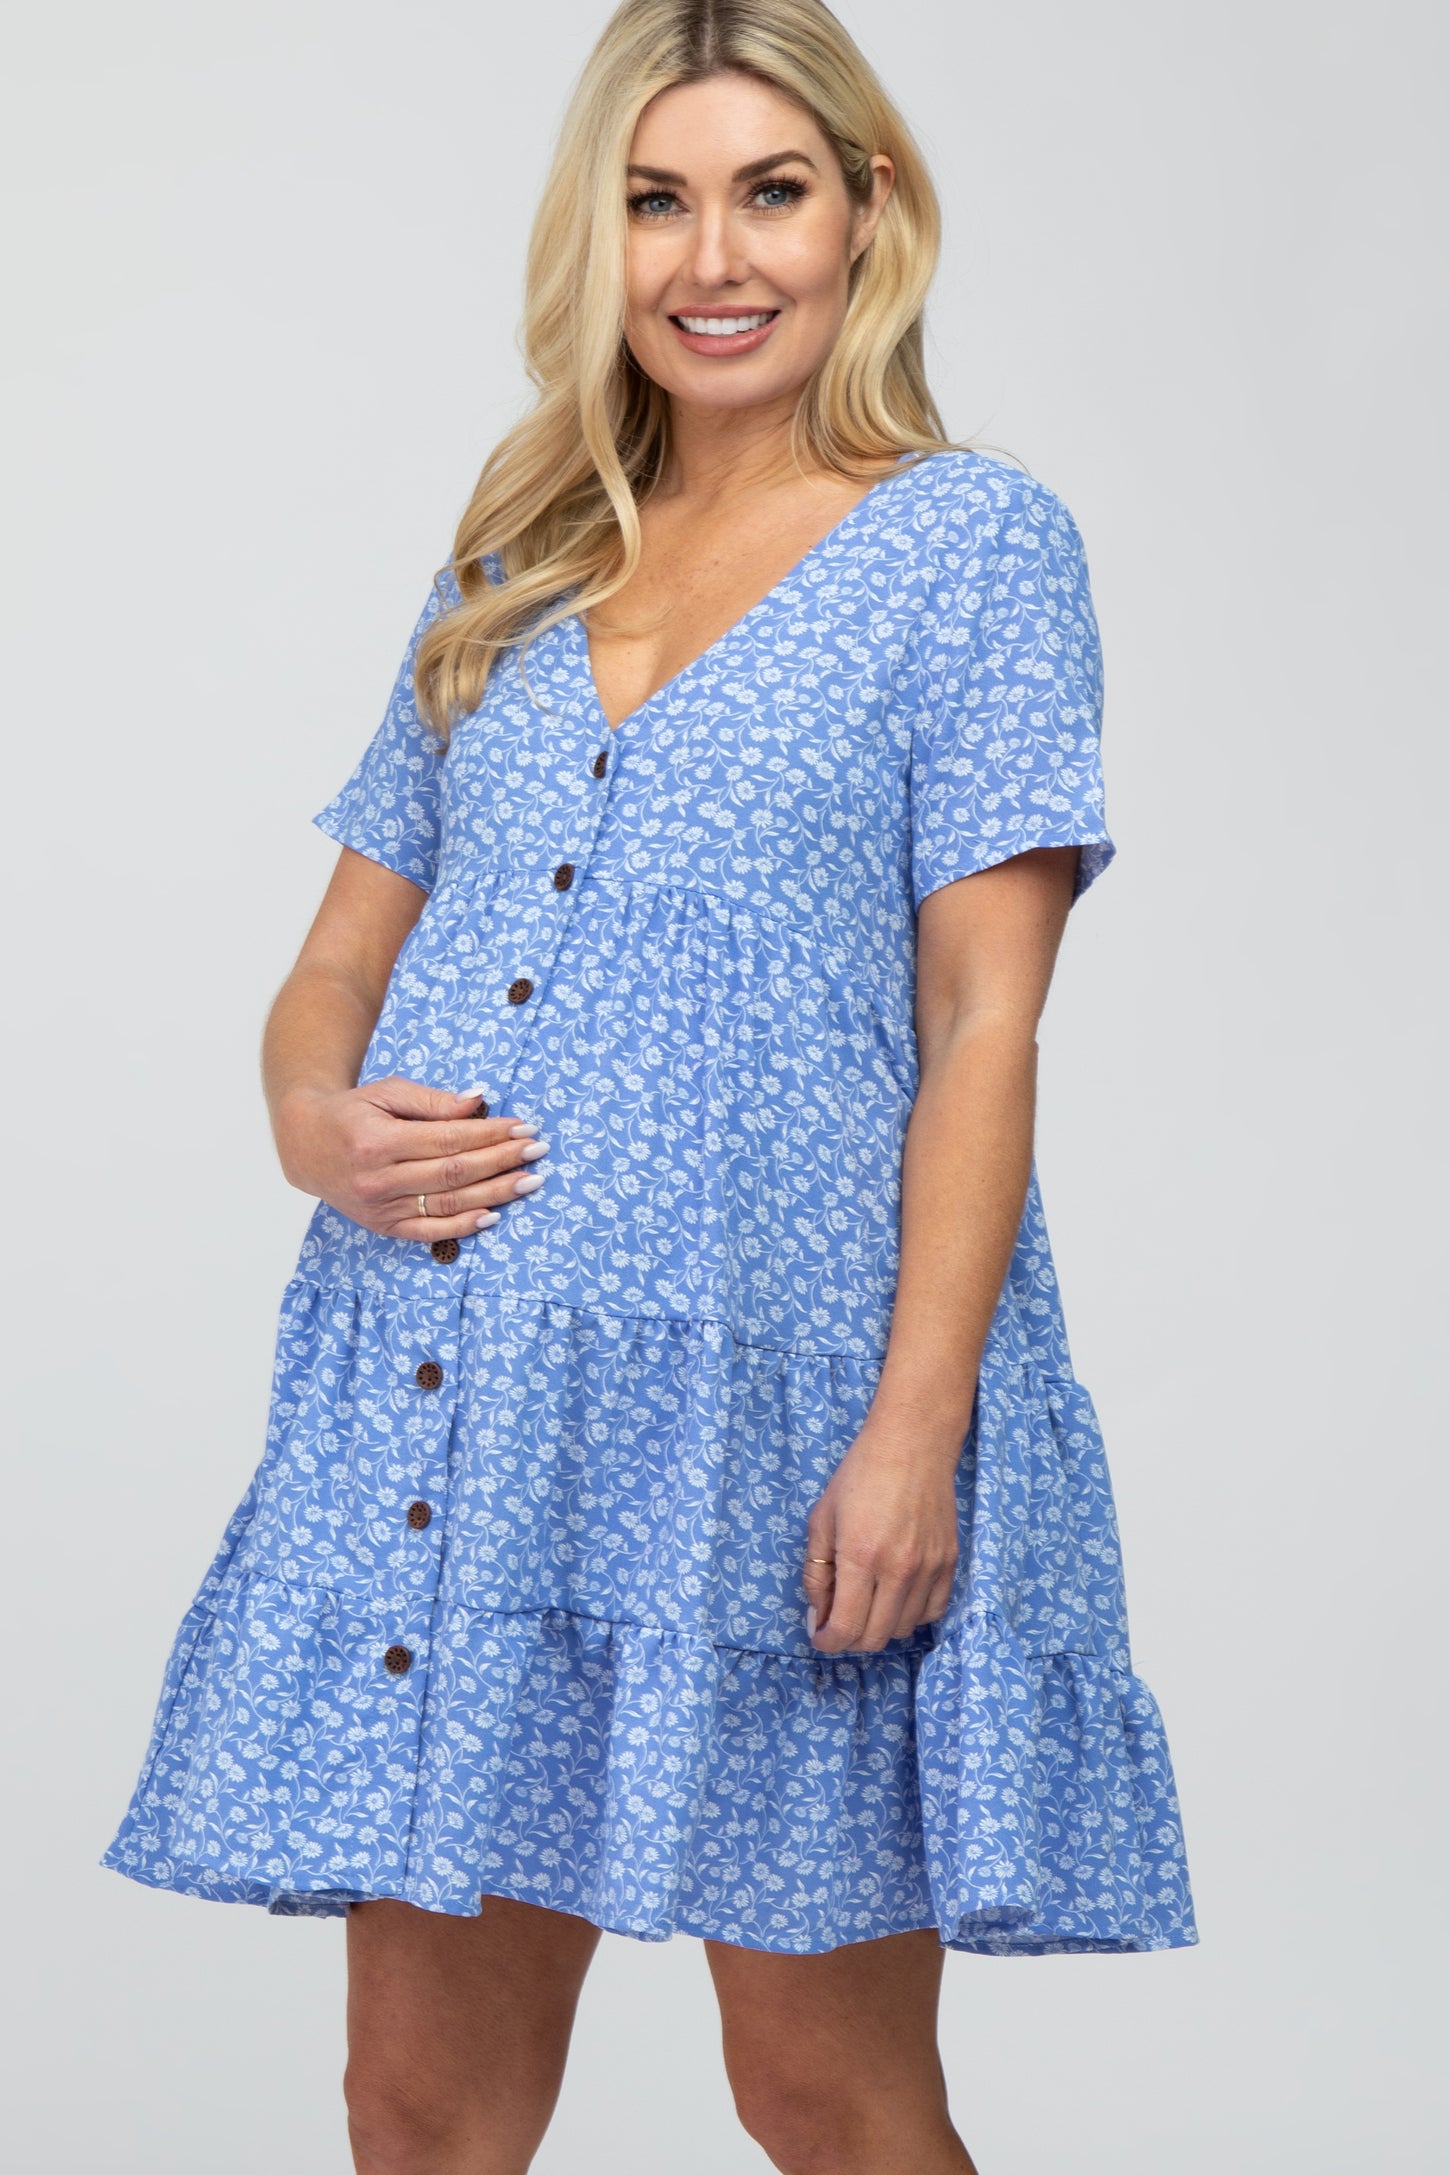 Blue Floral Button Down Maternity Dress